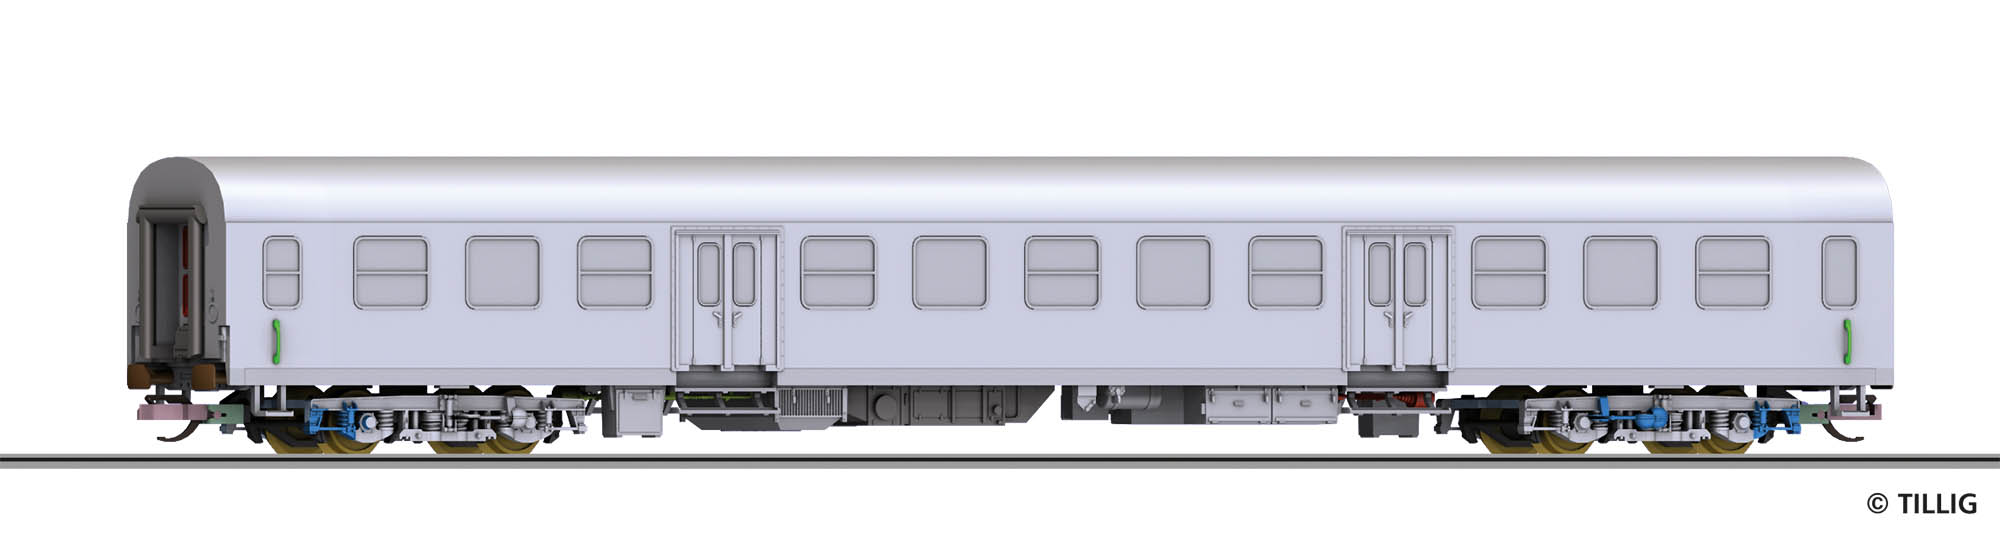 010-12600 - TT - Reisezugwagen 1./2. Klasse Aby 407, Bauart Halberstadt, DB AG, Ep. V<BR>-FORMNEUHEIT 2022-